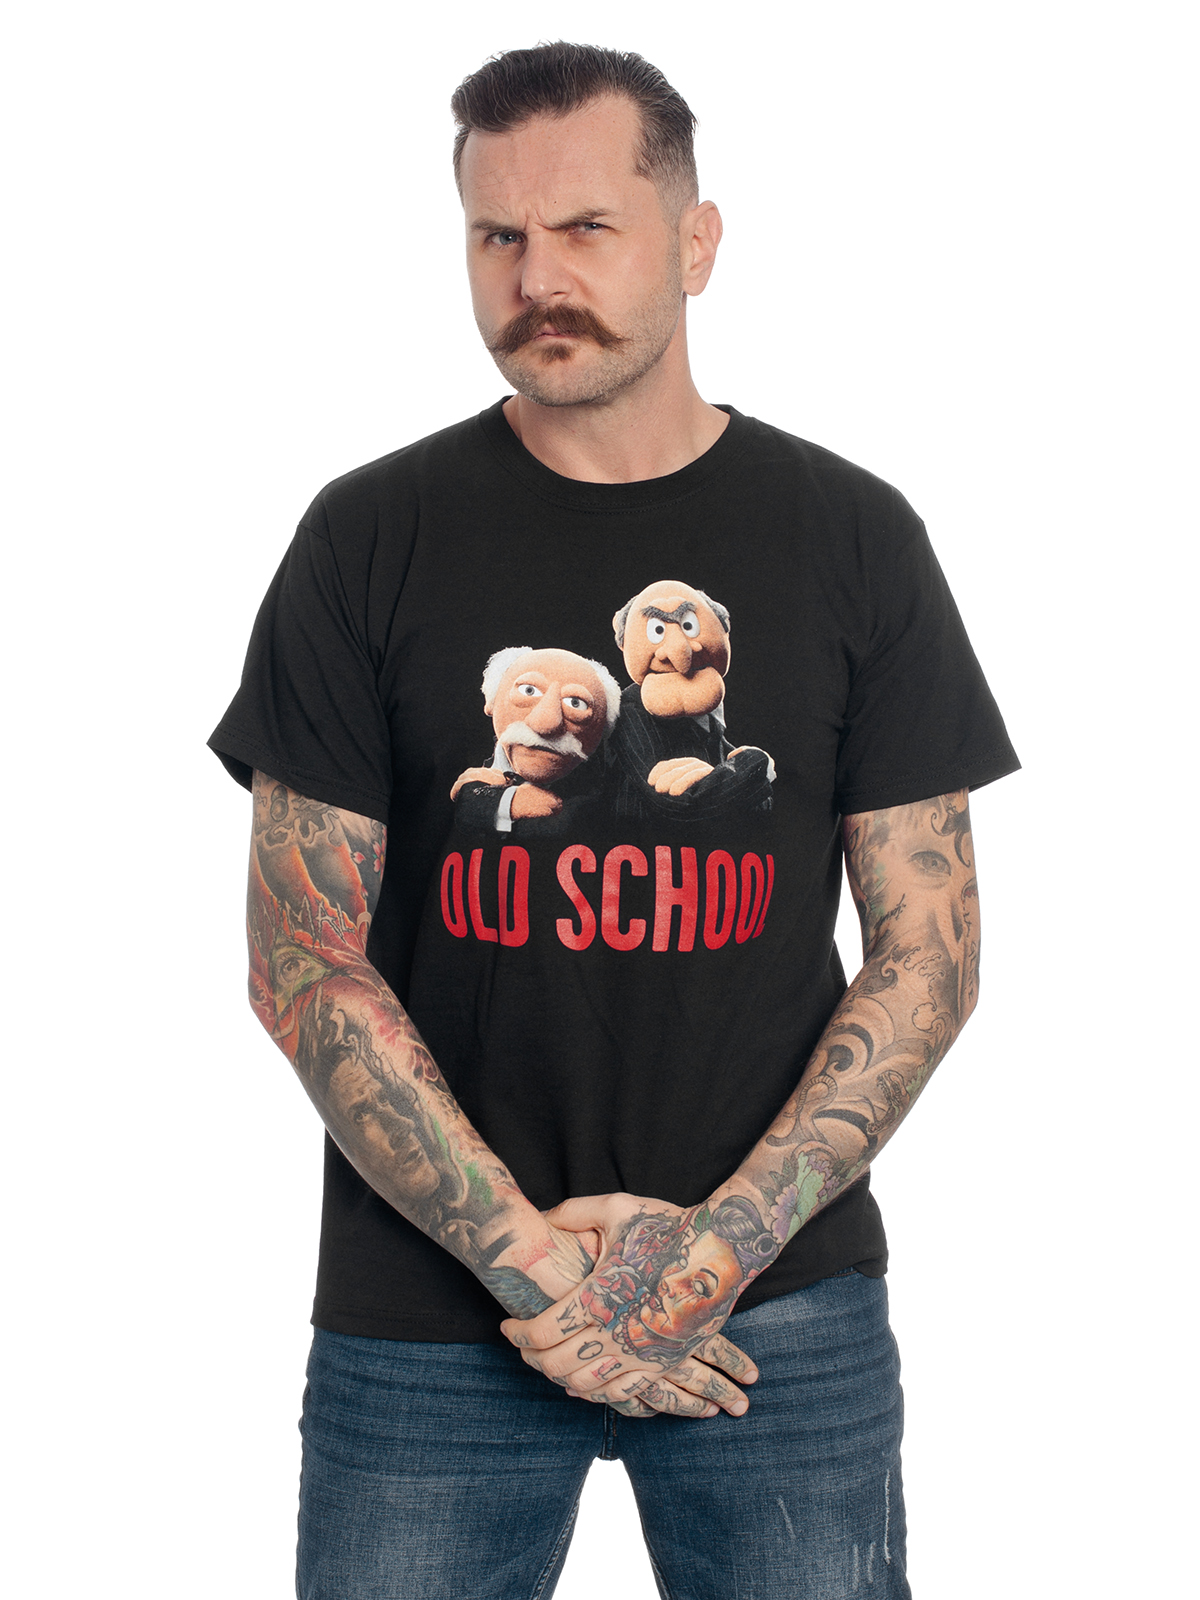 The Muppets Old school Herren T-Shirt schwarz